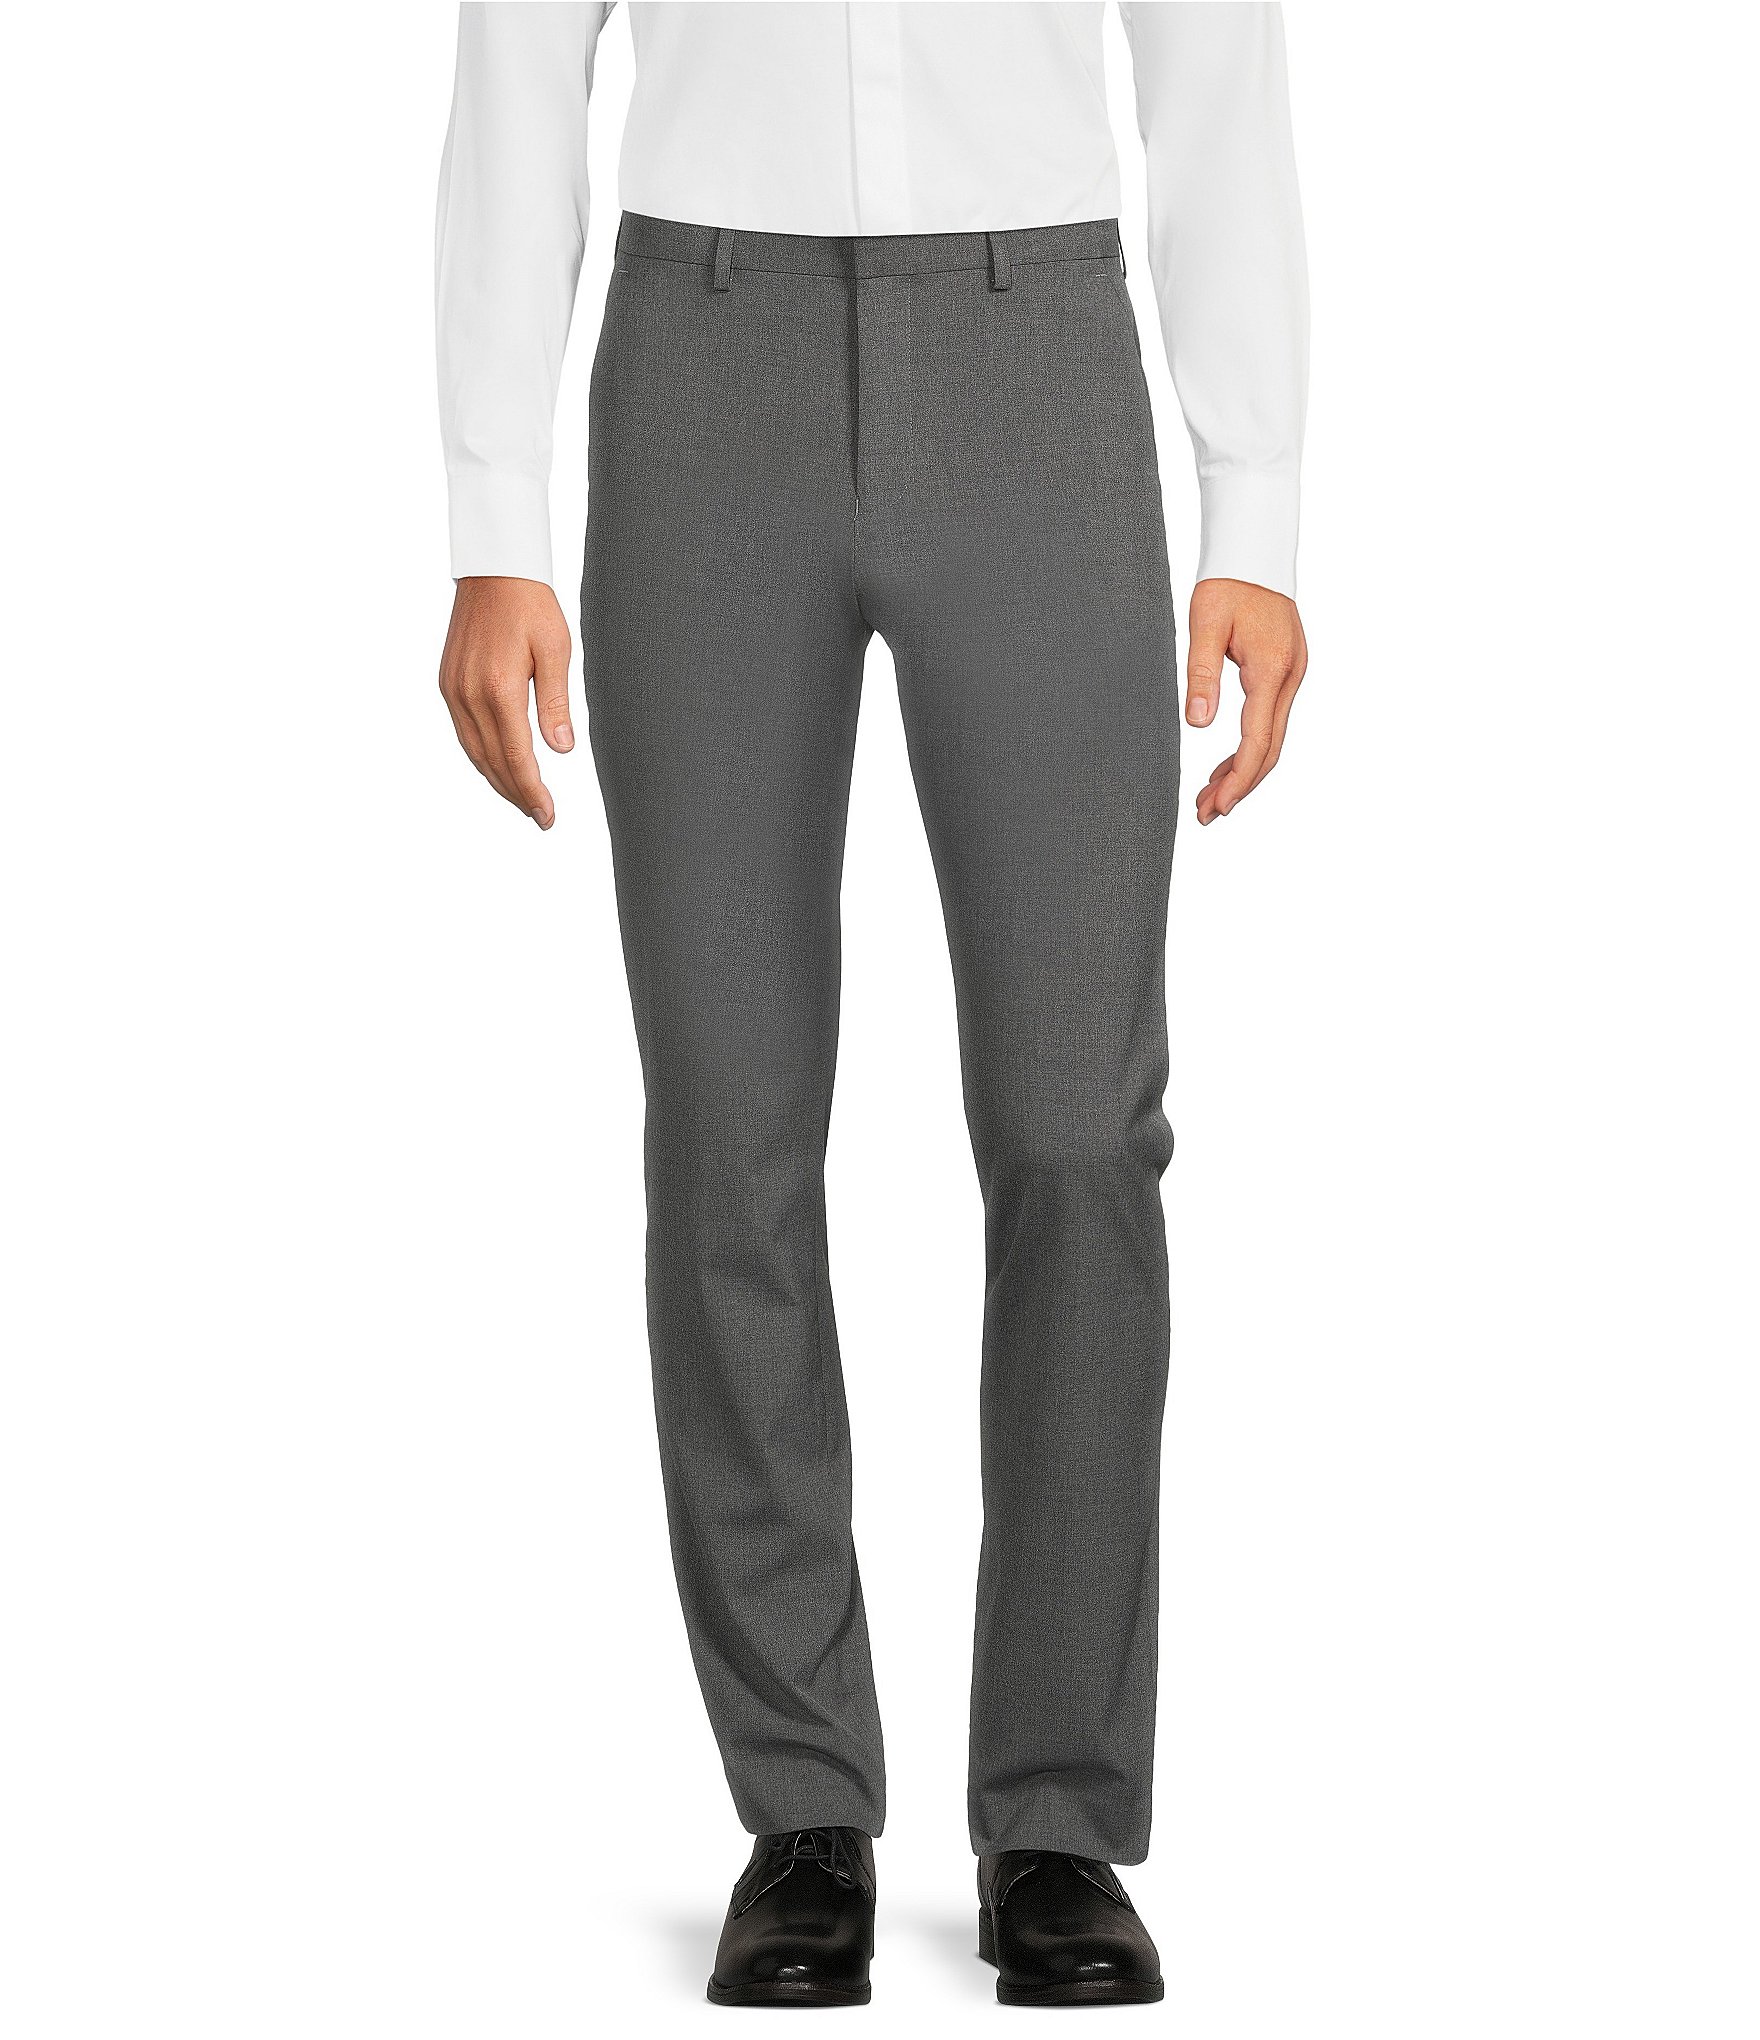 Men's Pants Korean Fashion Slim Fit Business Casual Long Trousers Summer  Size D | eBay